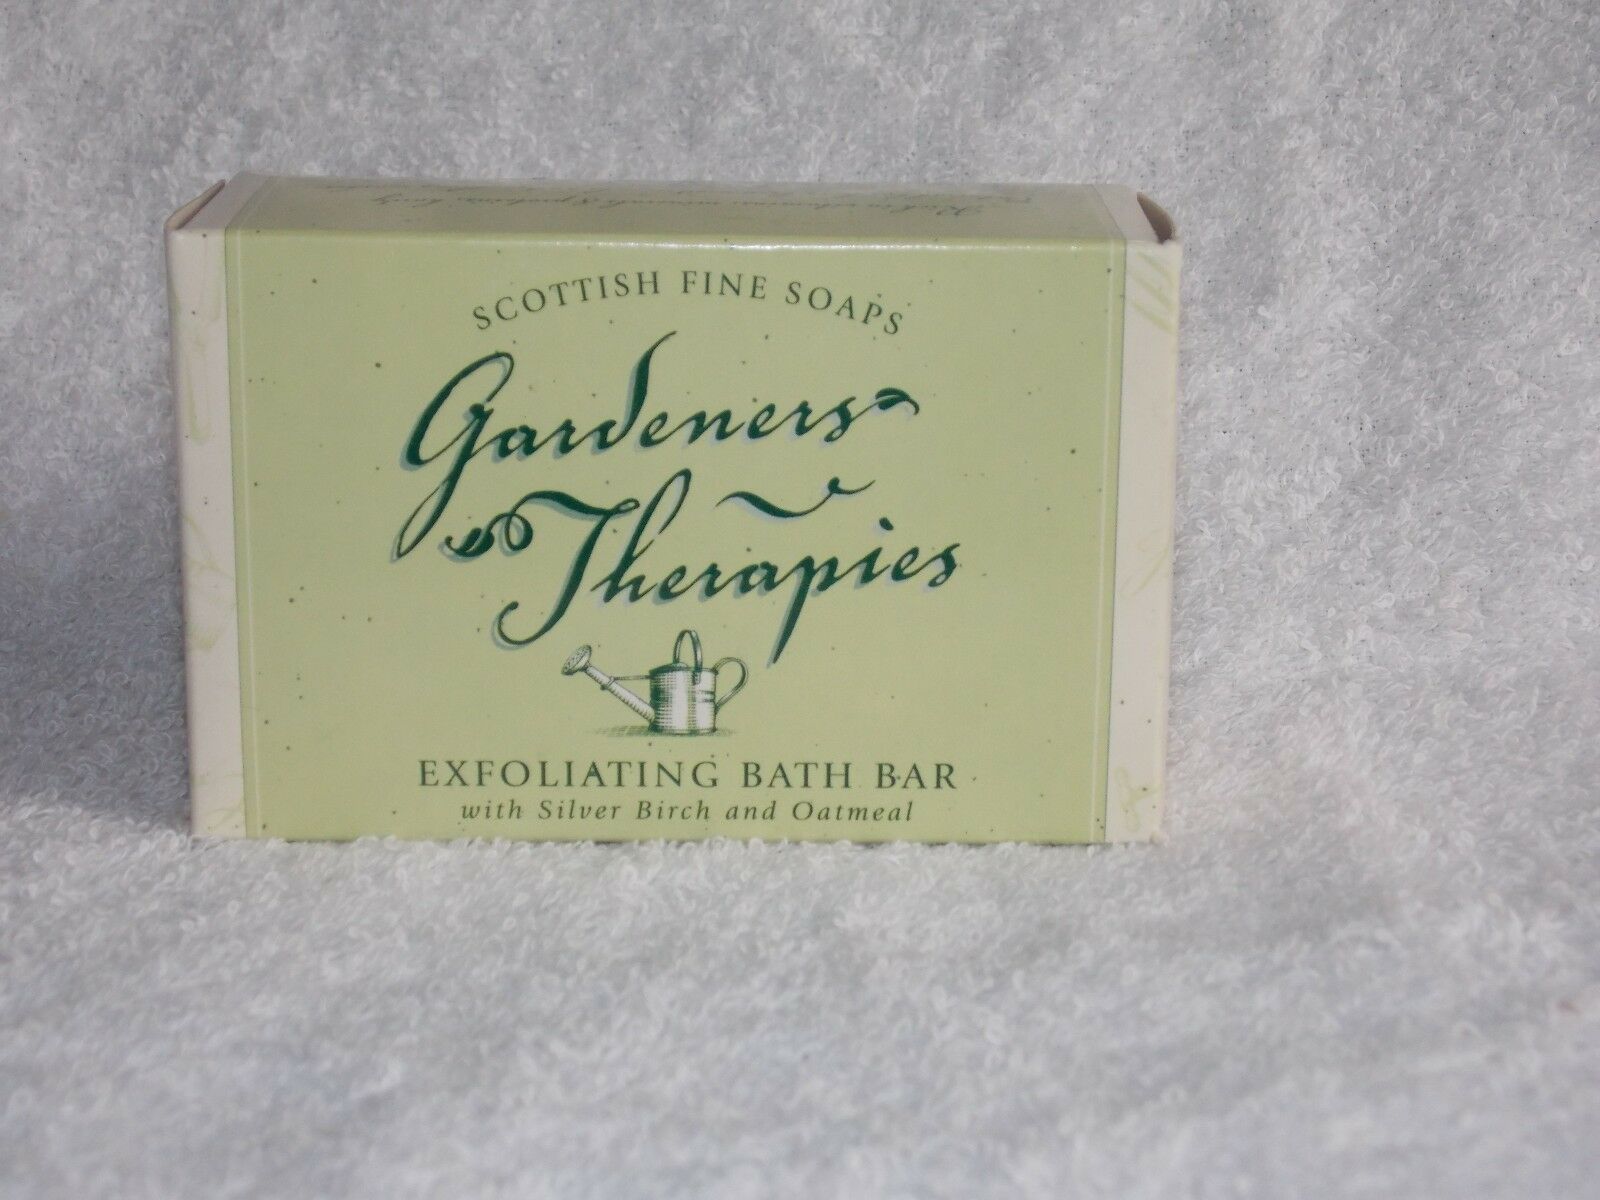 Scottish Fine Soaps GARDENERS THERAPIES Exfoliating Bath Bar Soap 7 oz/200g New - $12.87